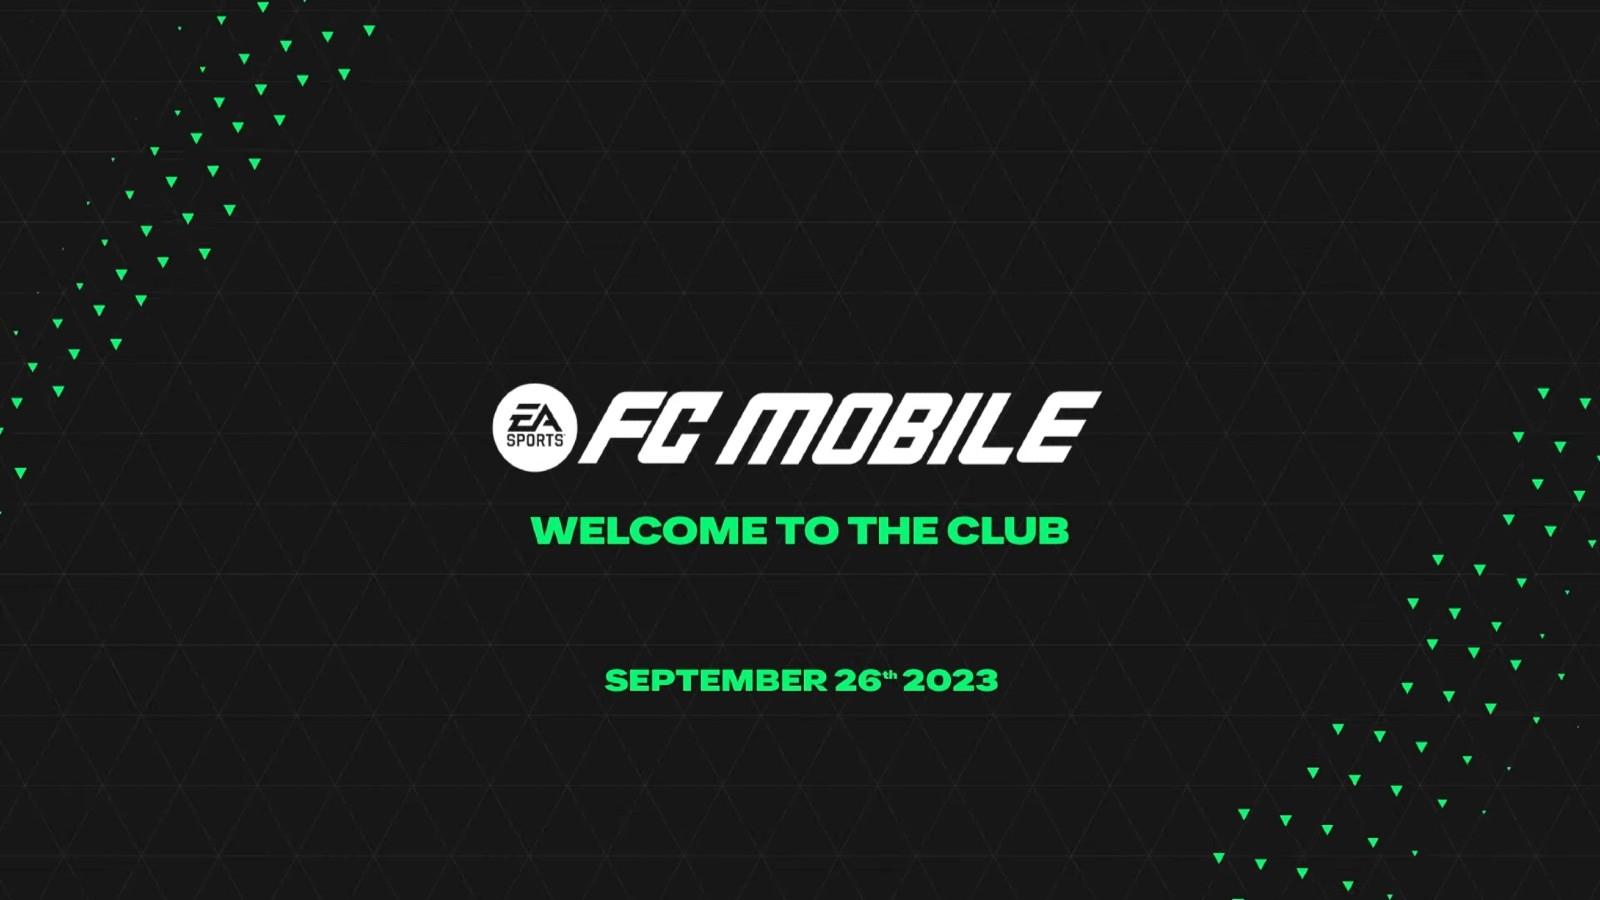 EA FC Mobile: Release date, cover star, more